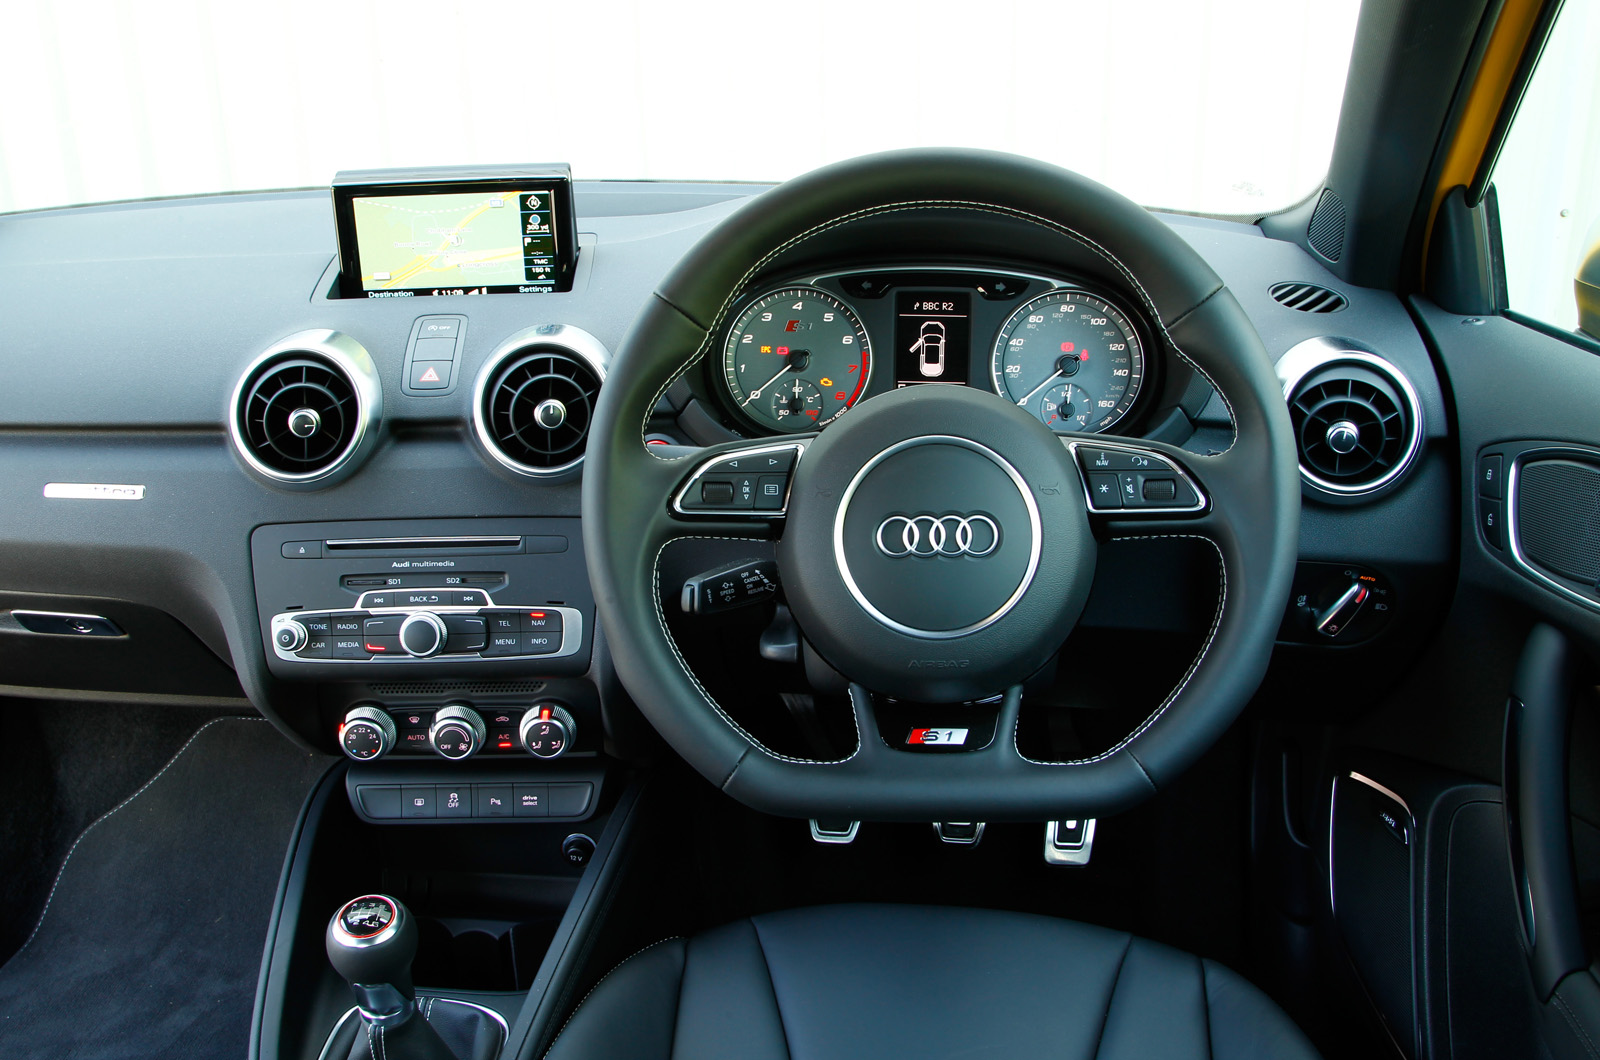 Audi S1's interior